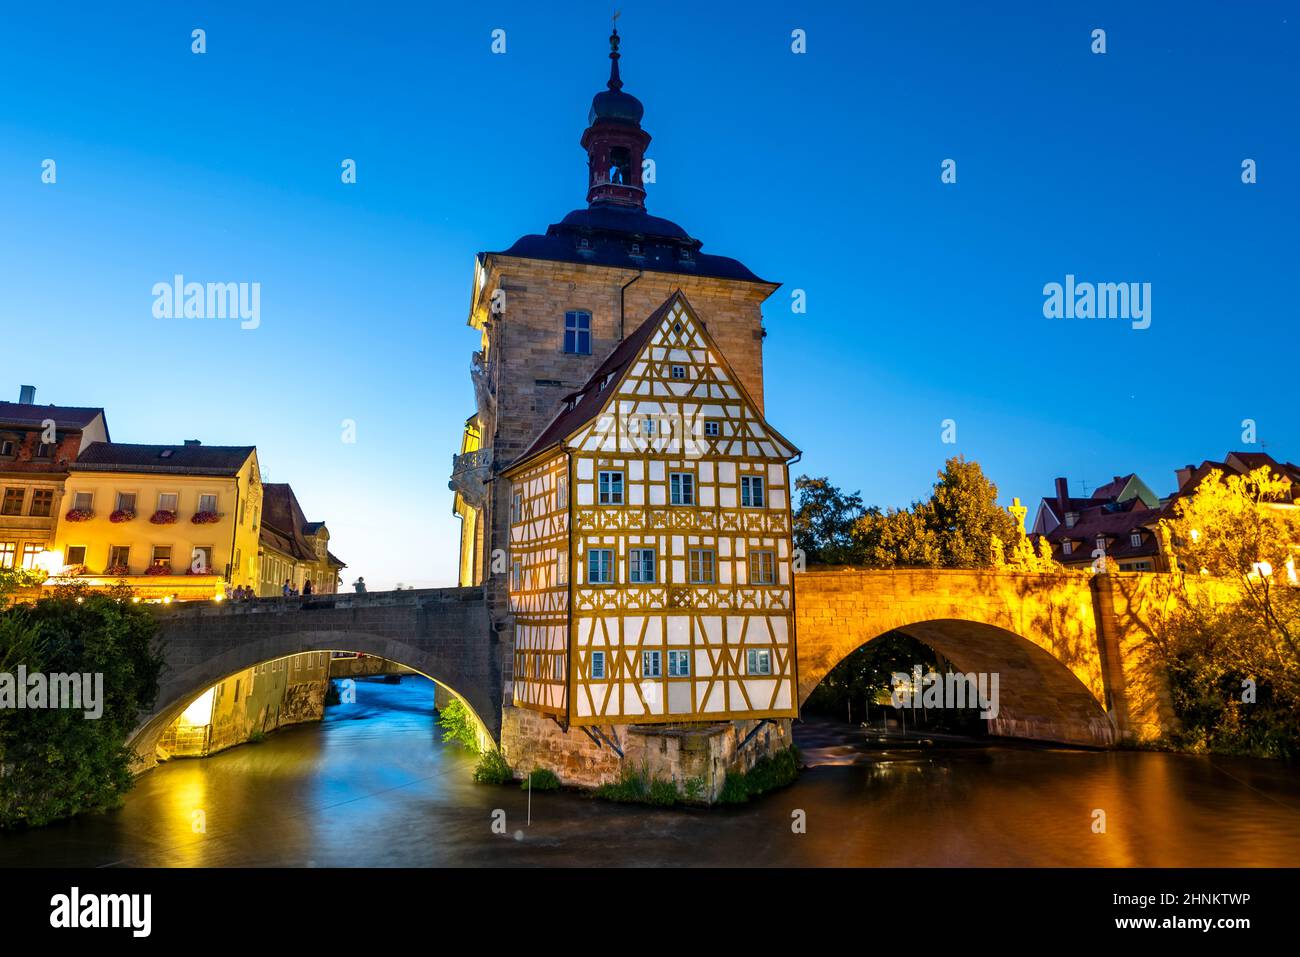 The old city house of Bamberg, Franconia, Germany Stock Photo